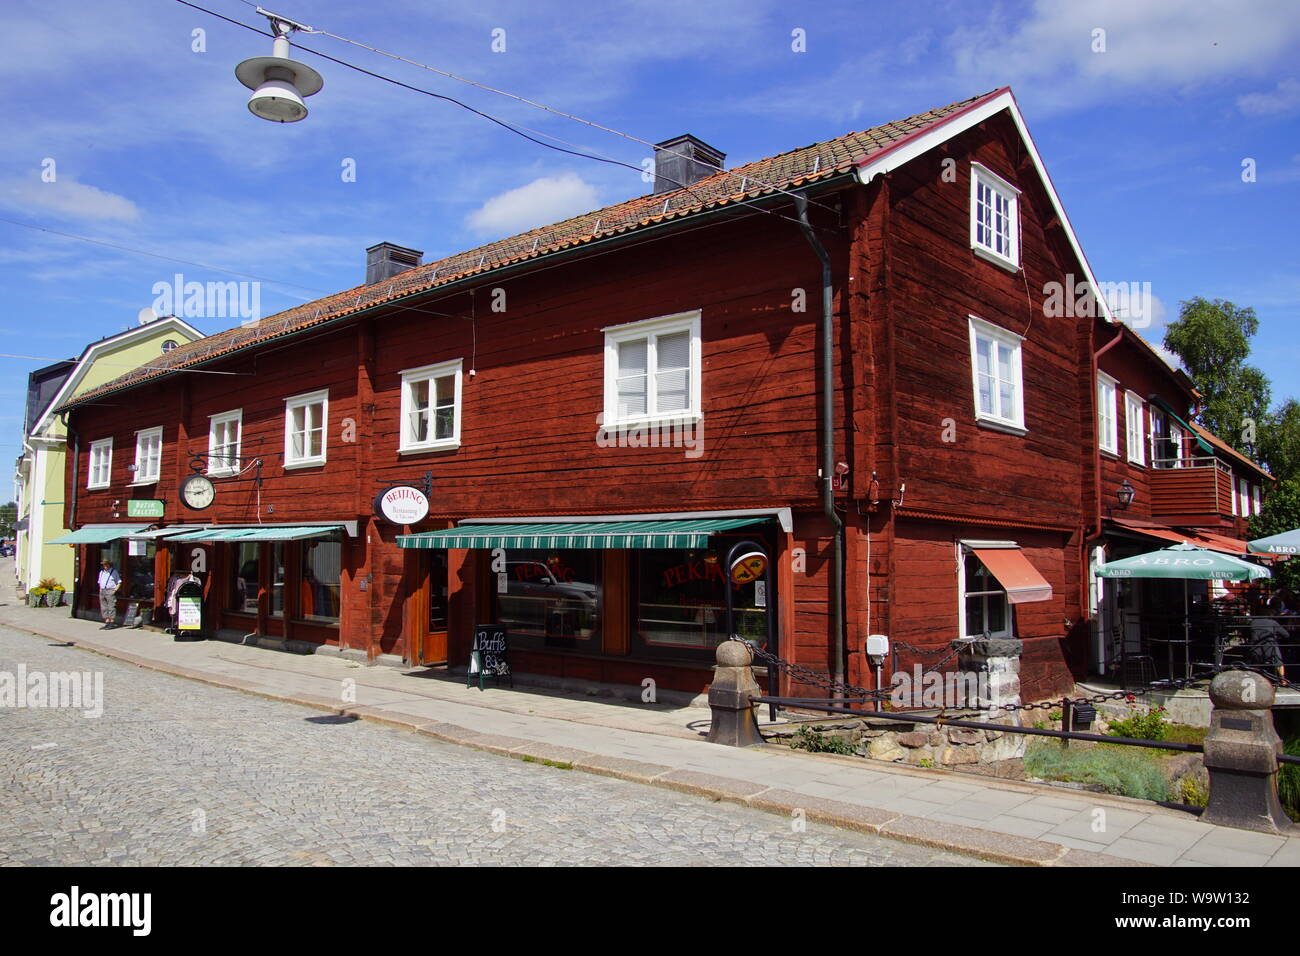 Eksjö, Jönköping County, Sweden - July 31, 2019: Traditional Swedish wooden building in the city center of Eksjö. Stock Photo